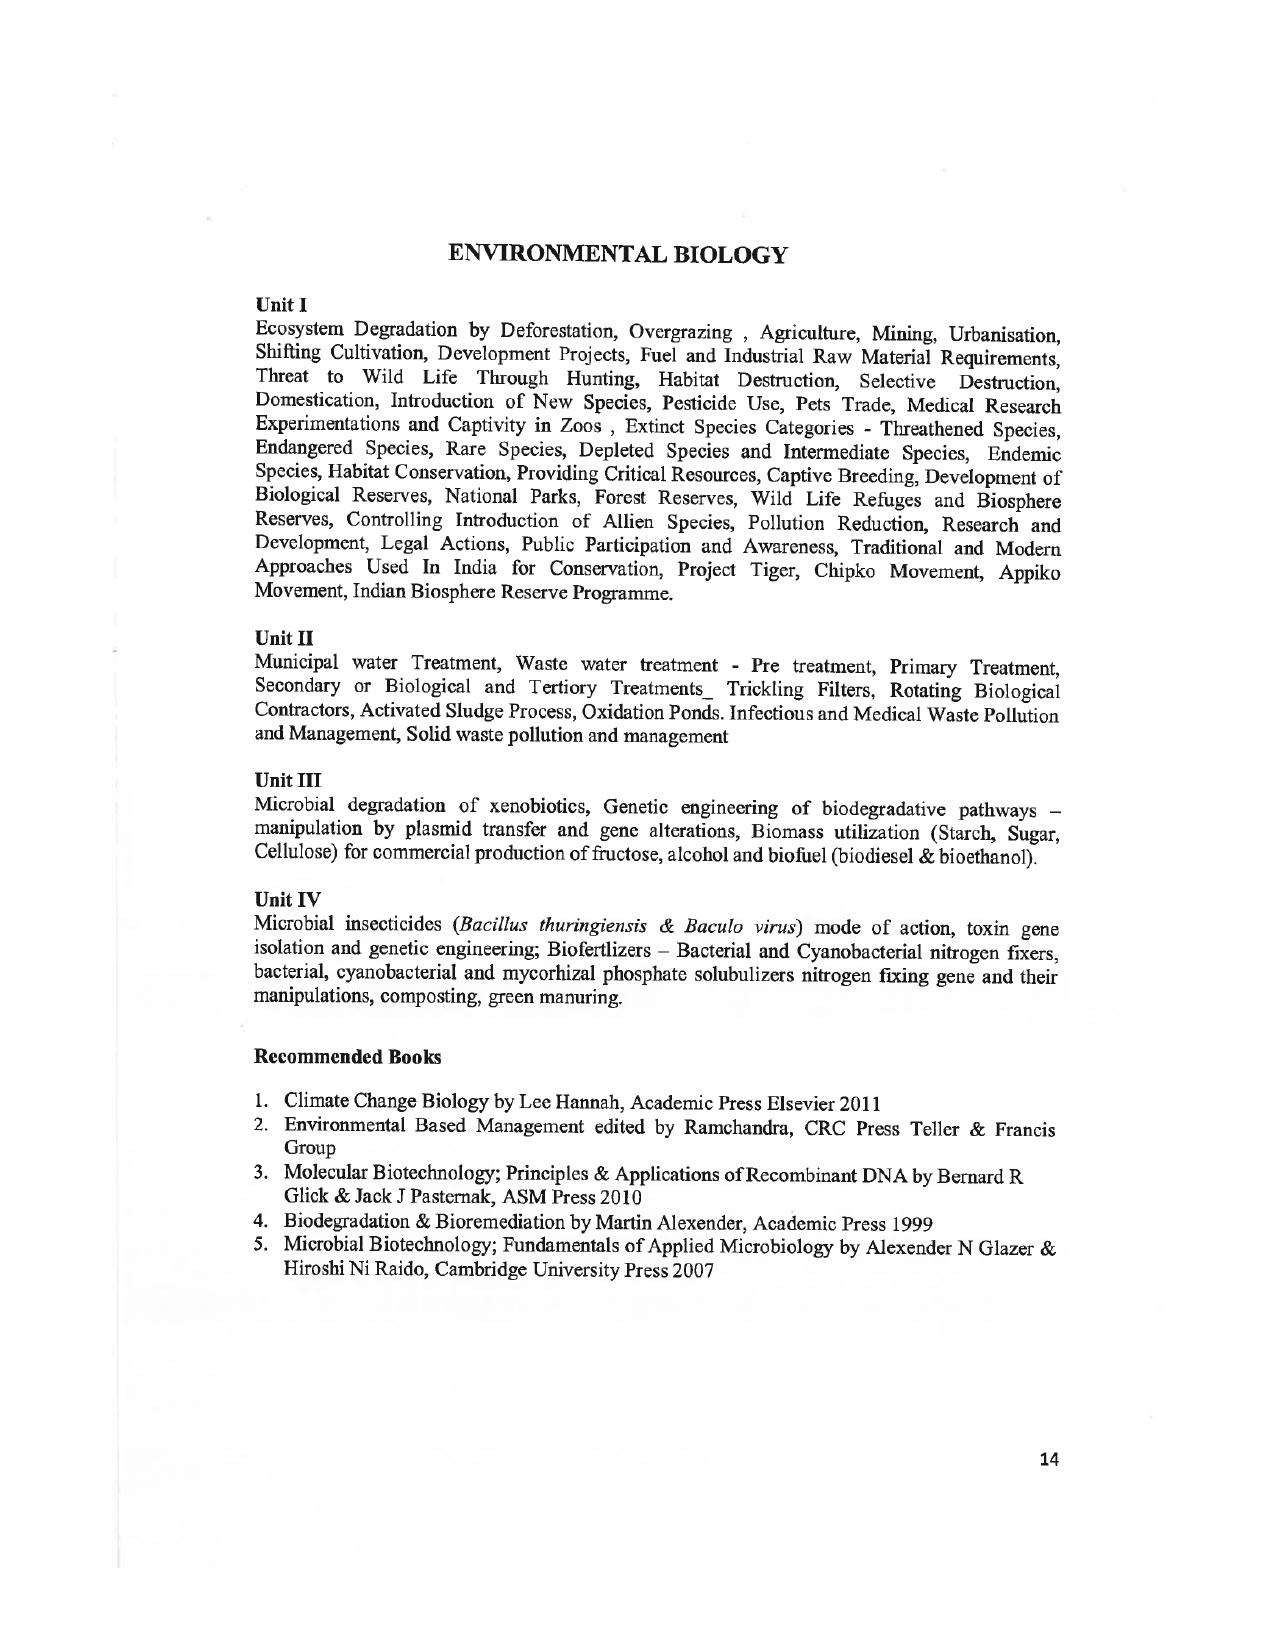 JMI Entrance Exam FACULTY OF NATURAL SCIENCES Syllabus - Page 14